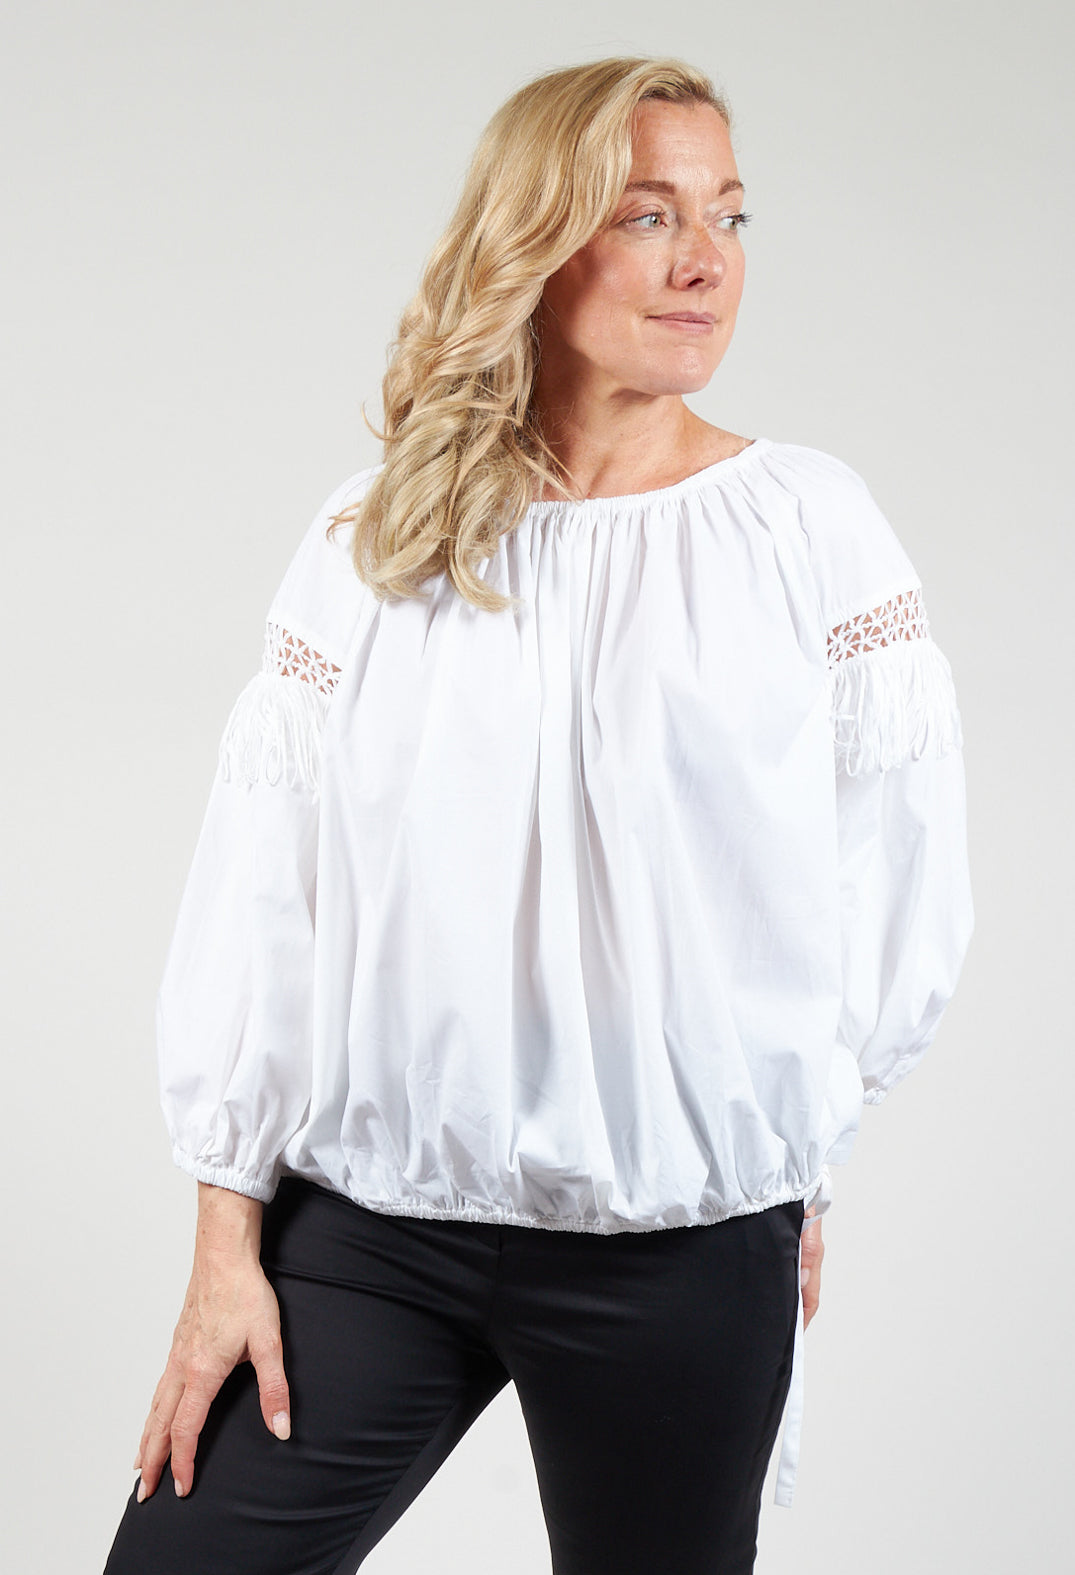 lady wearing a fringe open work detail blouse in white